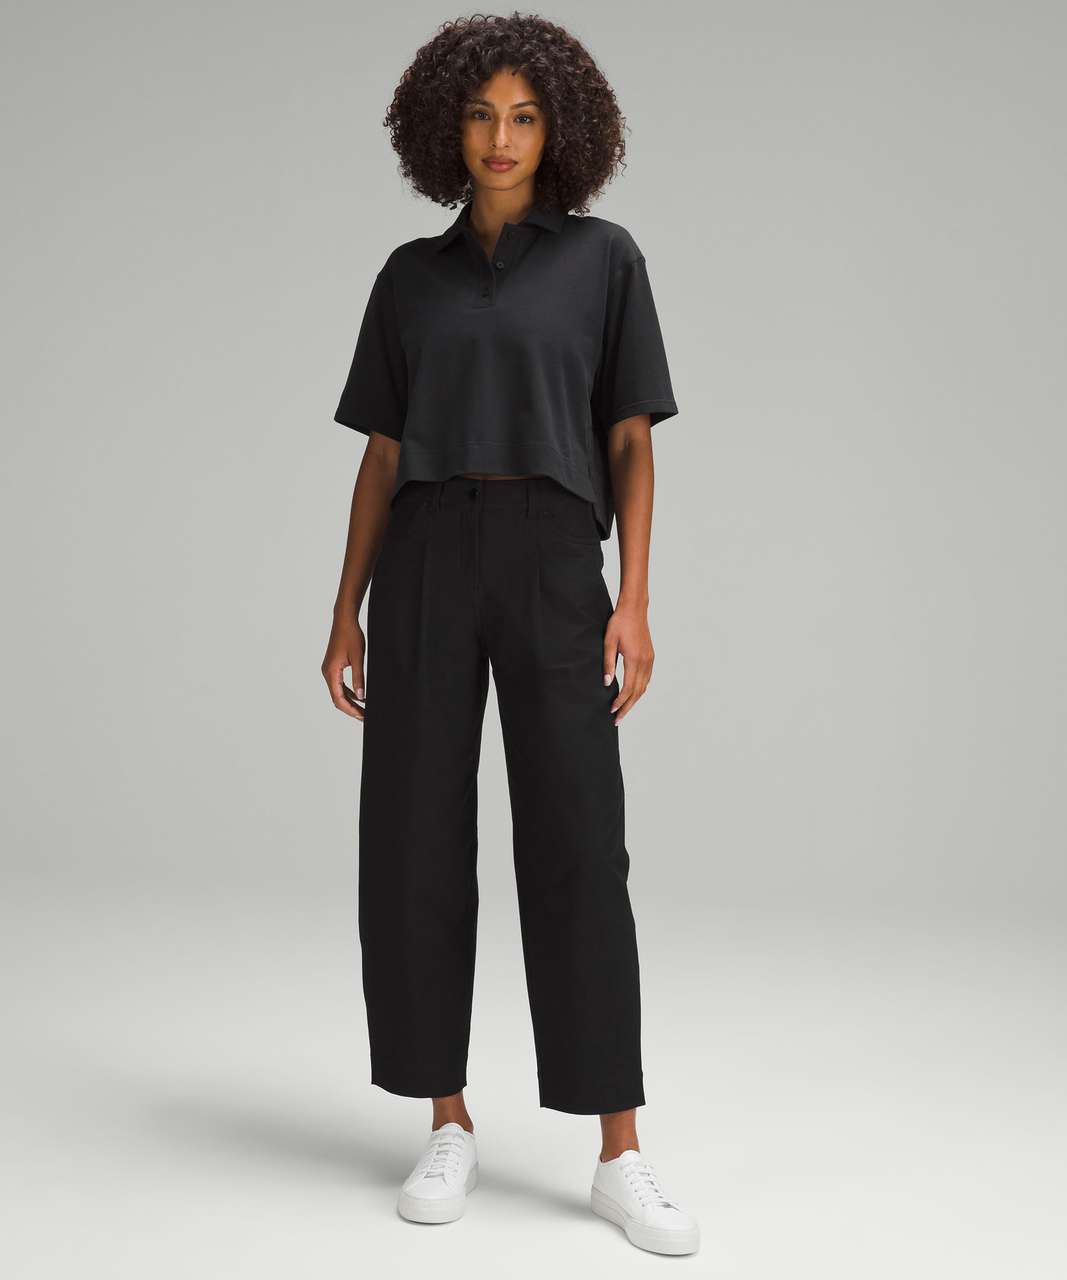 Lululemon Heavyweight Cotton Short-Sleeve Polo Shirt - Black